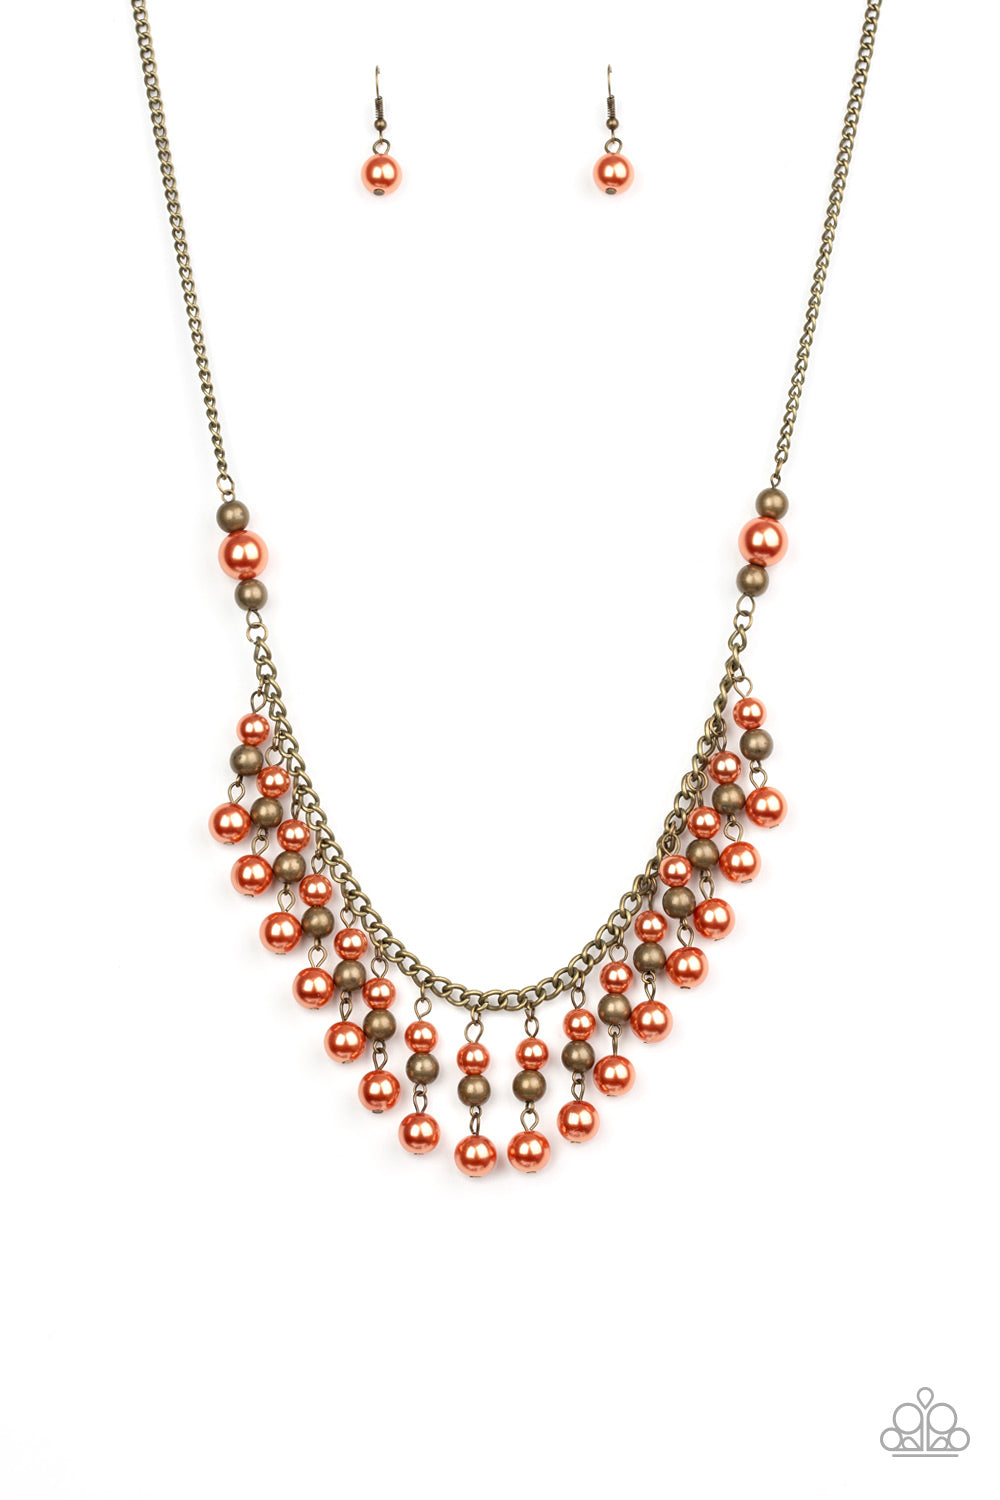 Location, Location, Location! Orange Paparazzi Necklaces Cashmere Pink Jewels - Cashmere Pink Jewels & Accessories, Cashmere Pink Jewels & Accessories - Paparazzi